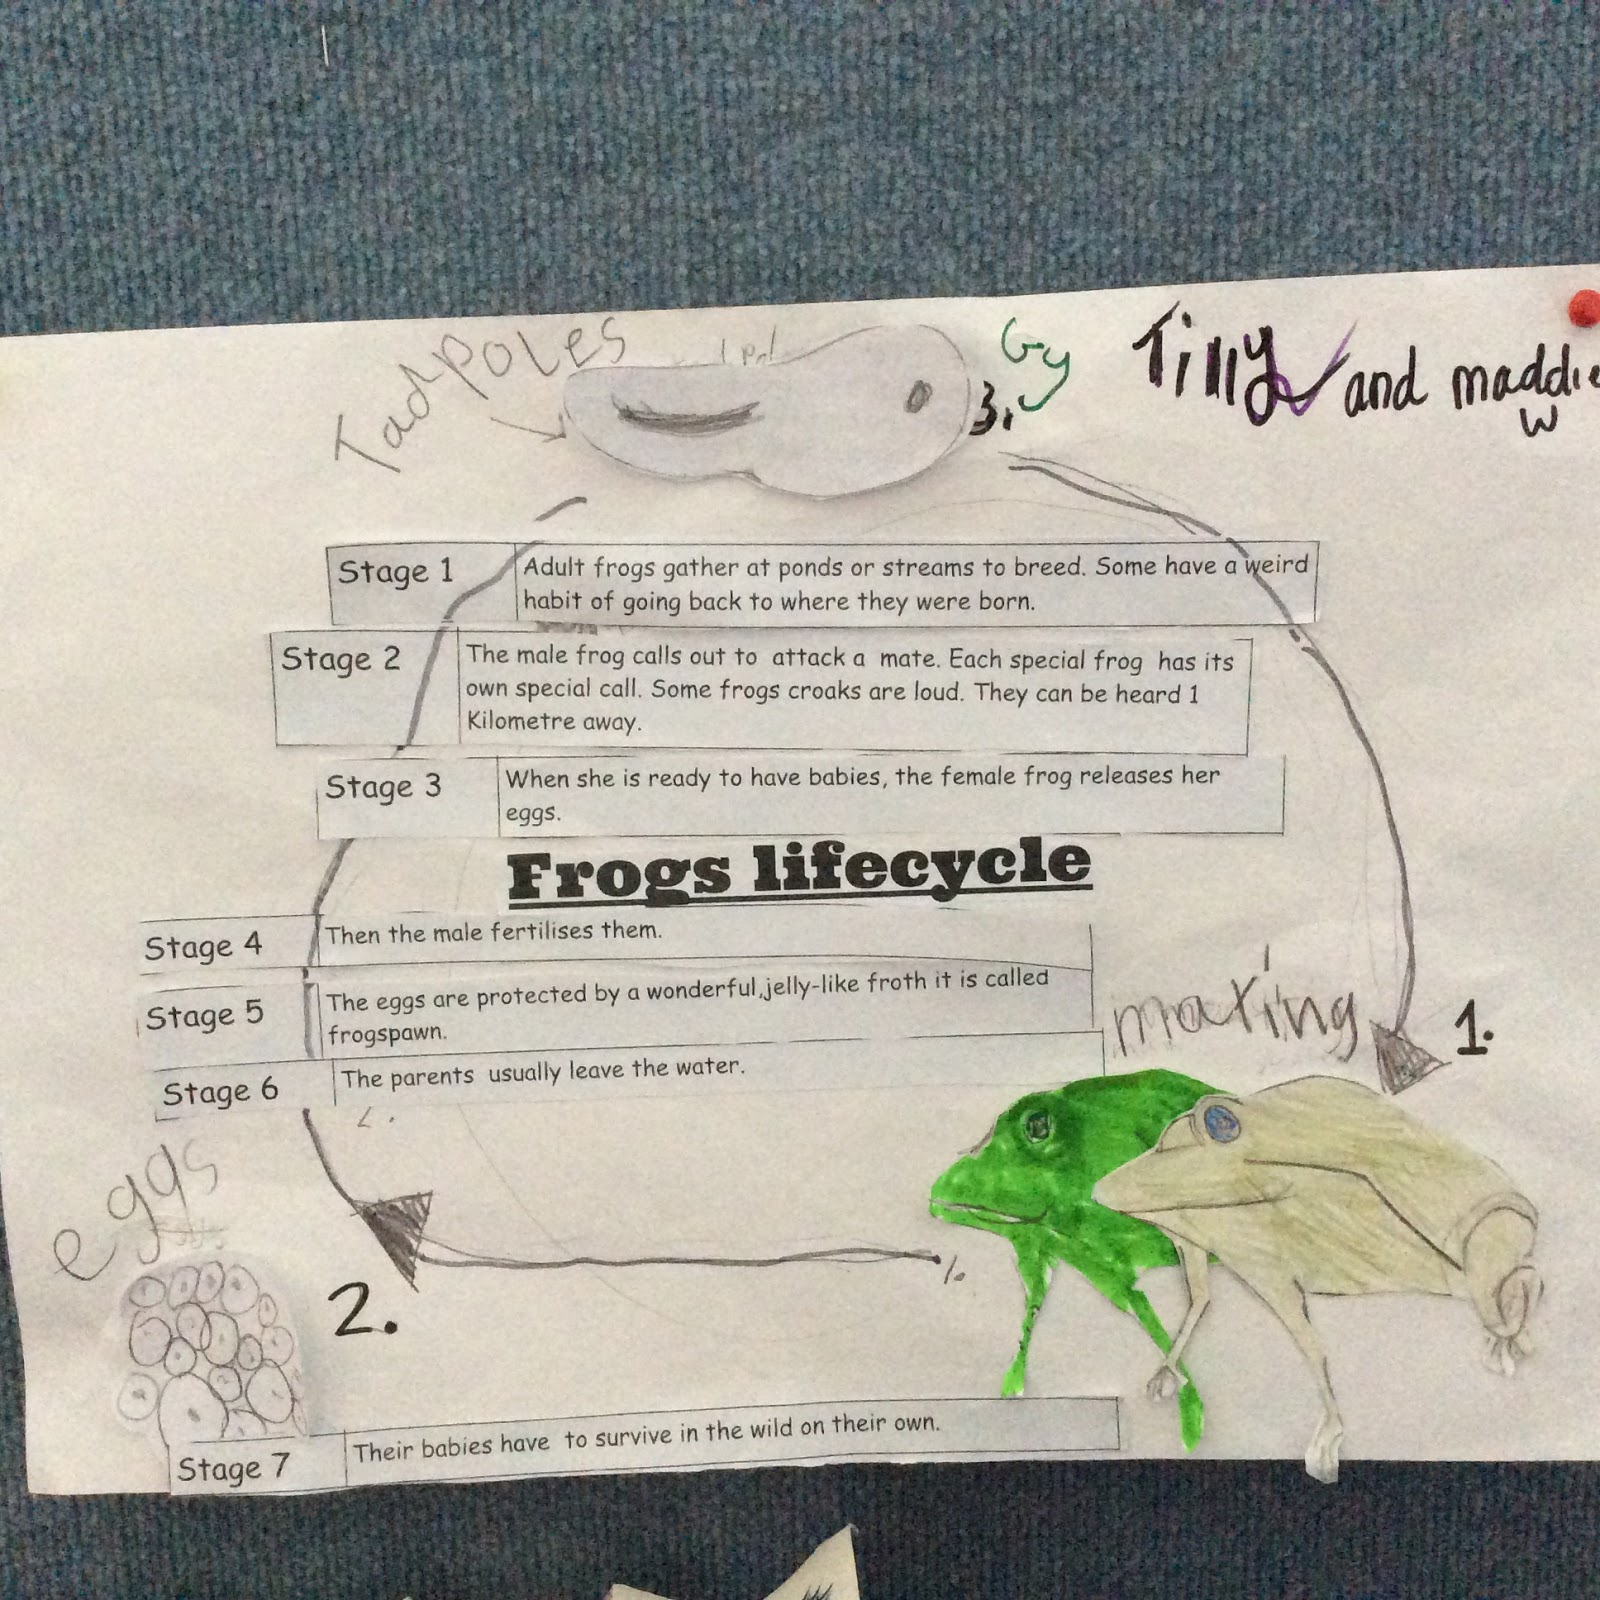 3 SIZES Blobfish Facts Print-educational Classroom 